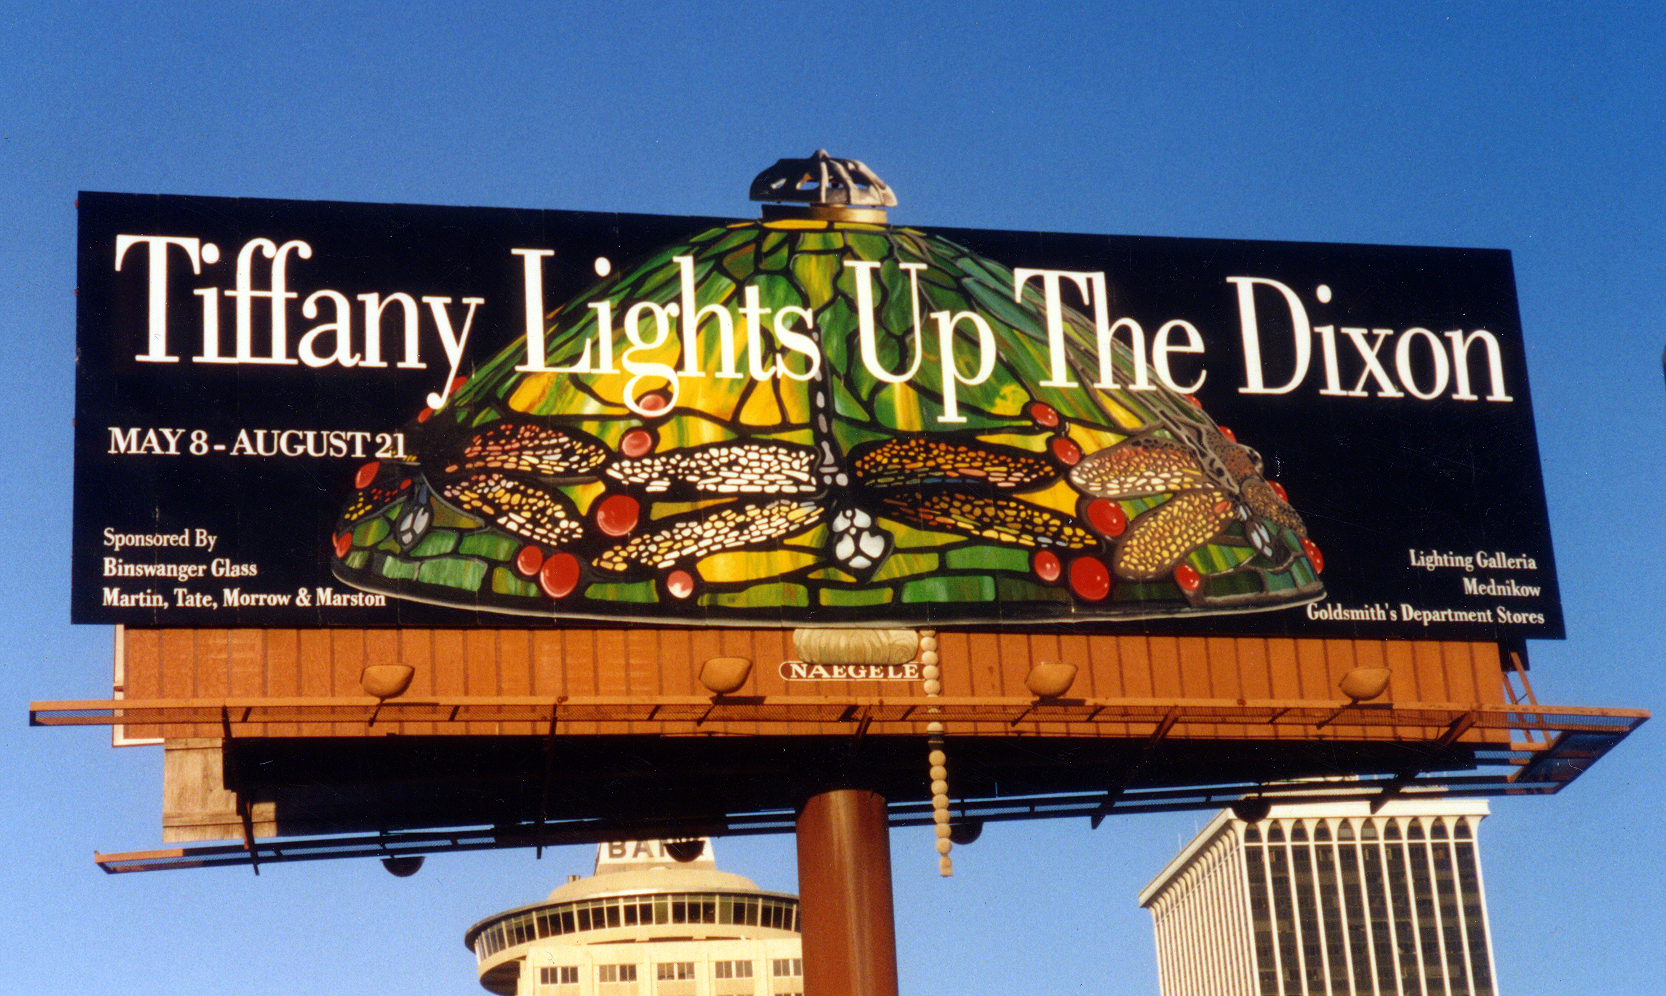  Dixon Gallery &amp; Gardens “Tiffany Lights Up The Dixon” outdoor “lamp” 